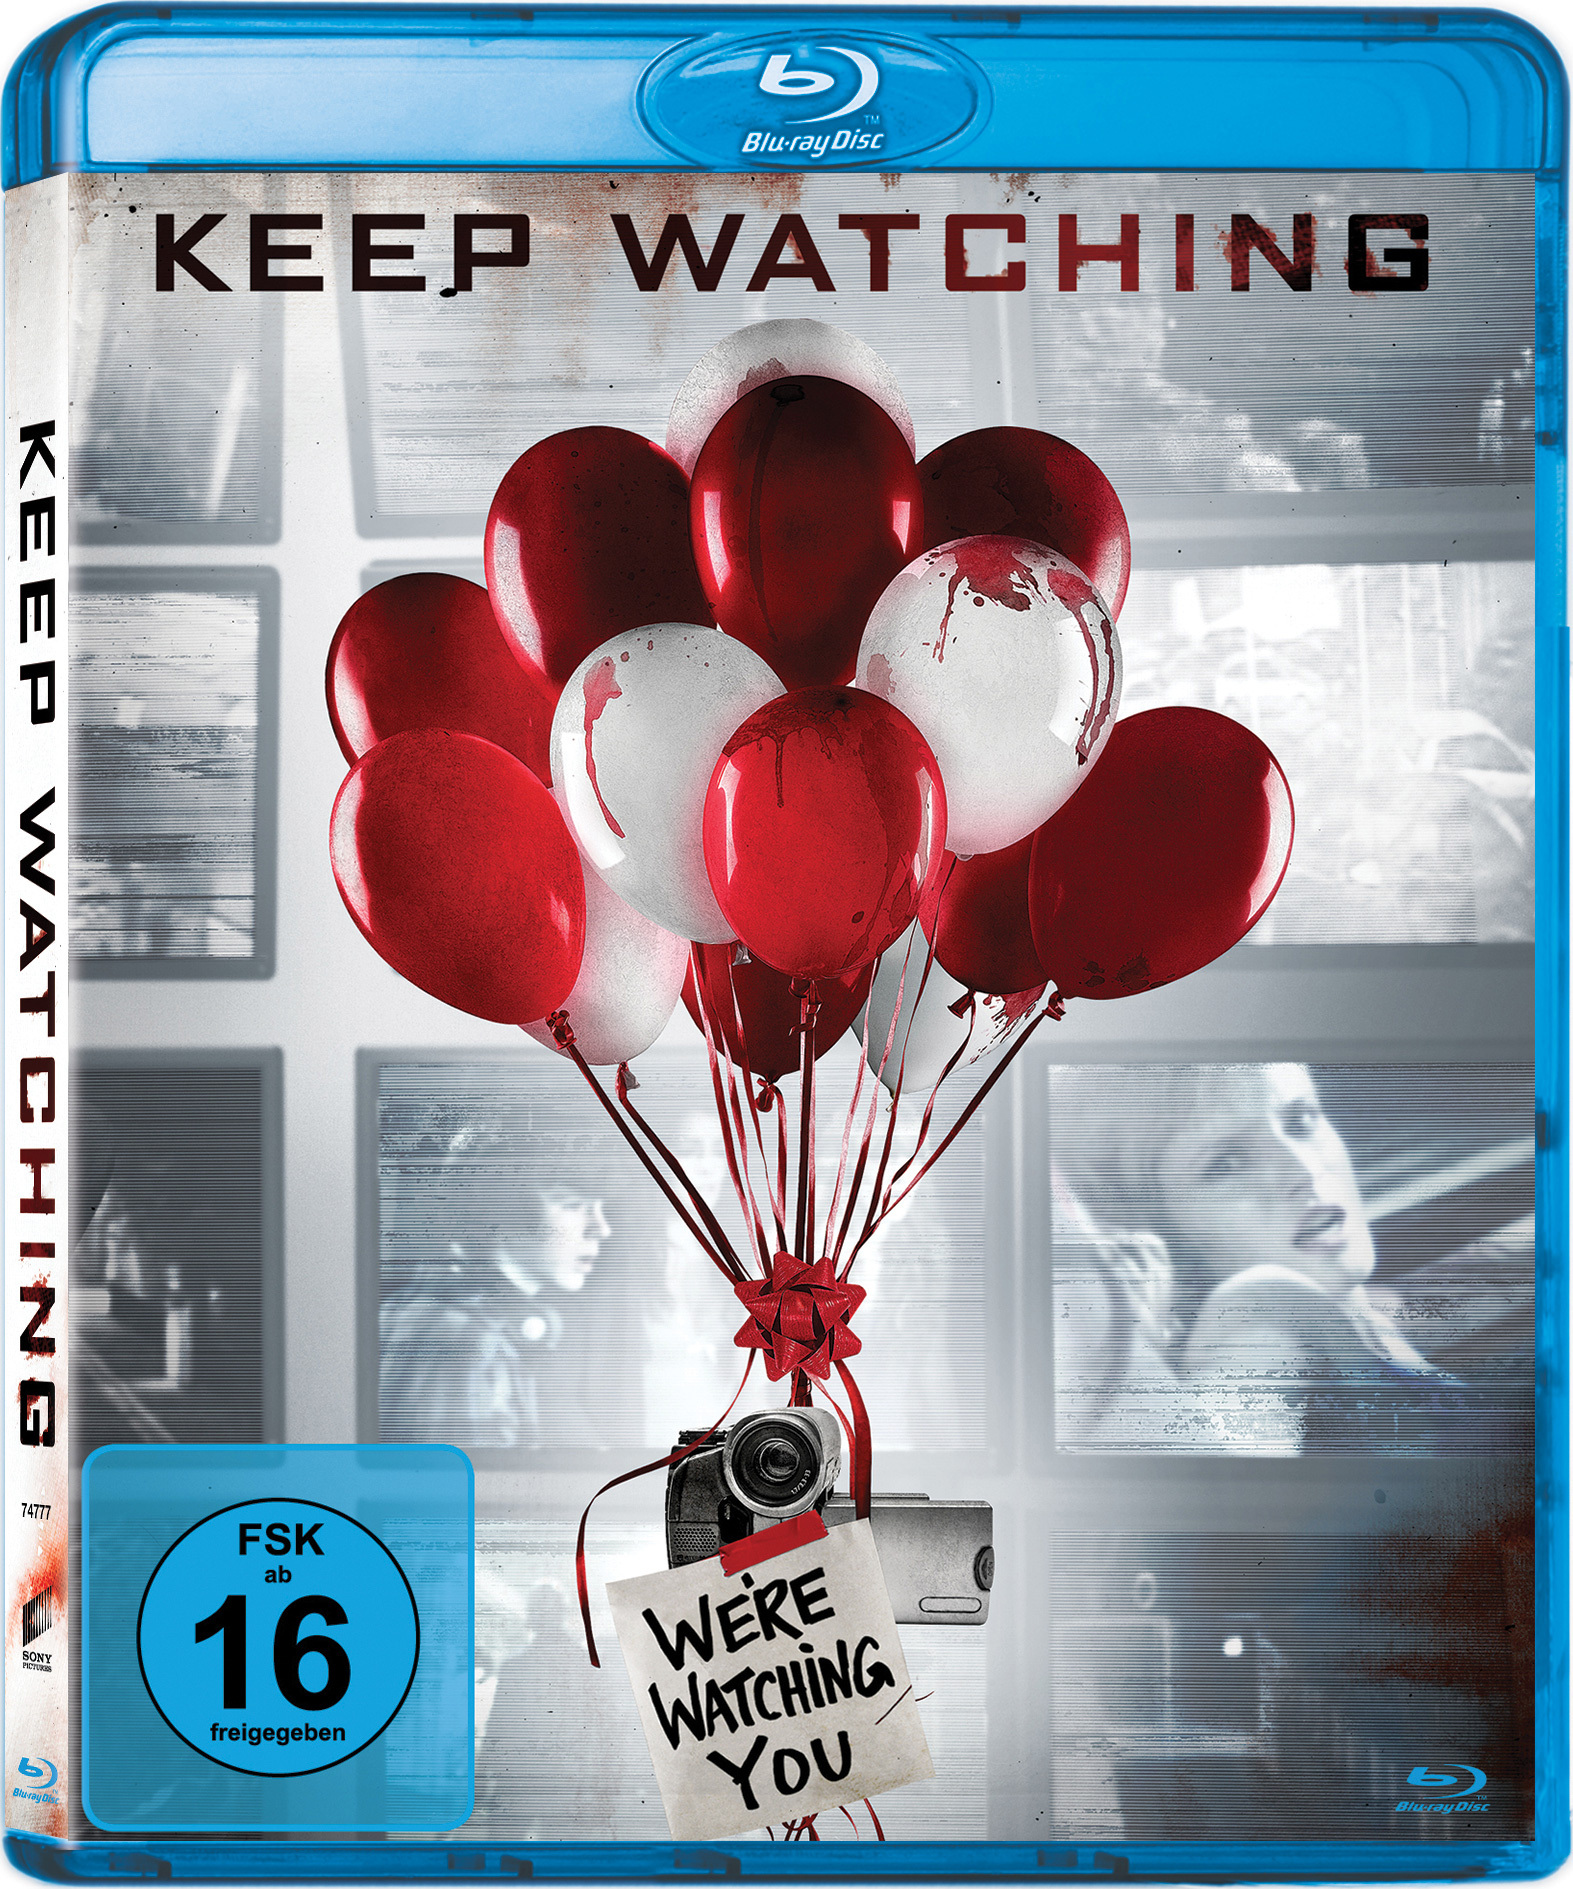 Keep watch me. Взломщик (DVD). Keep watching. Keep watch.